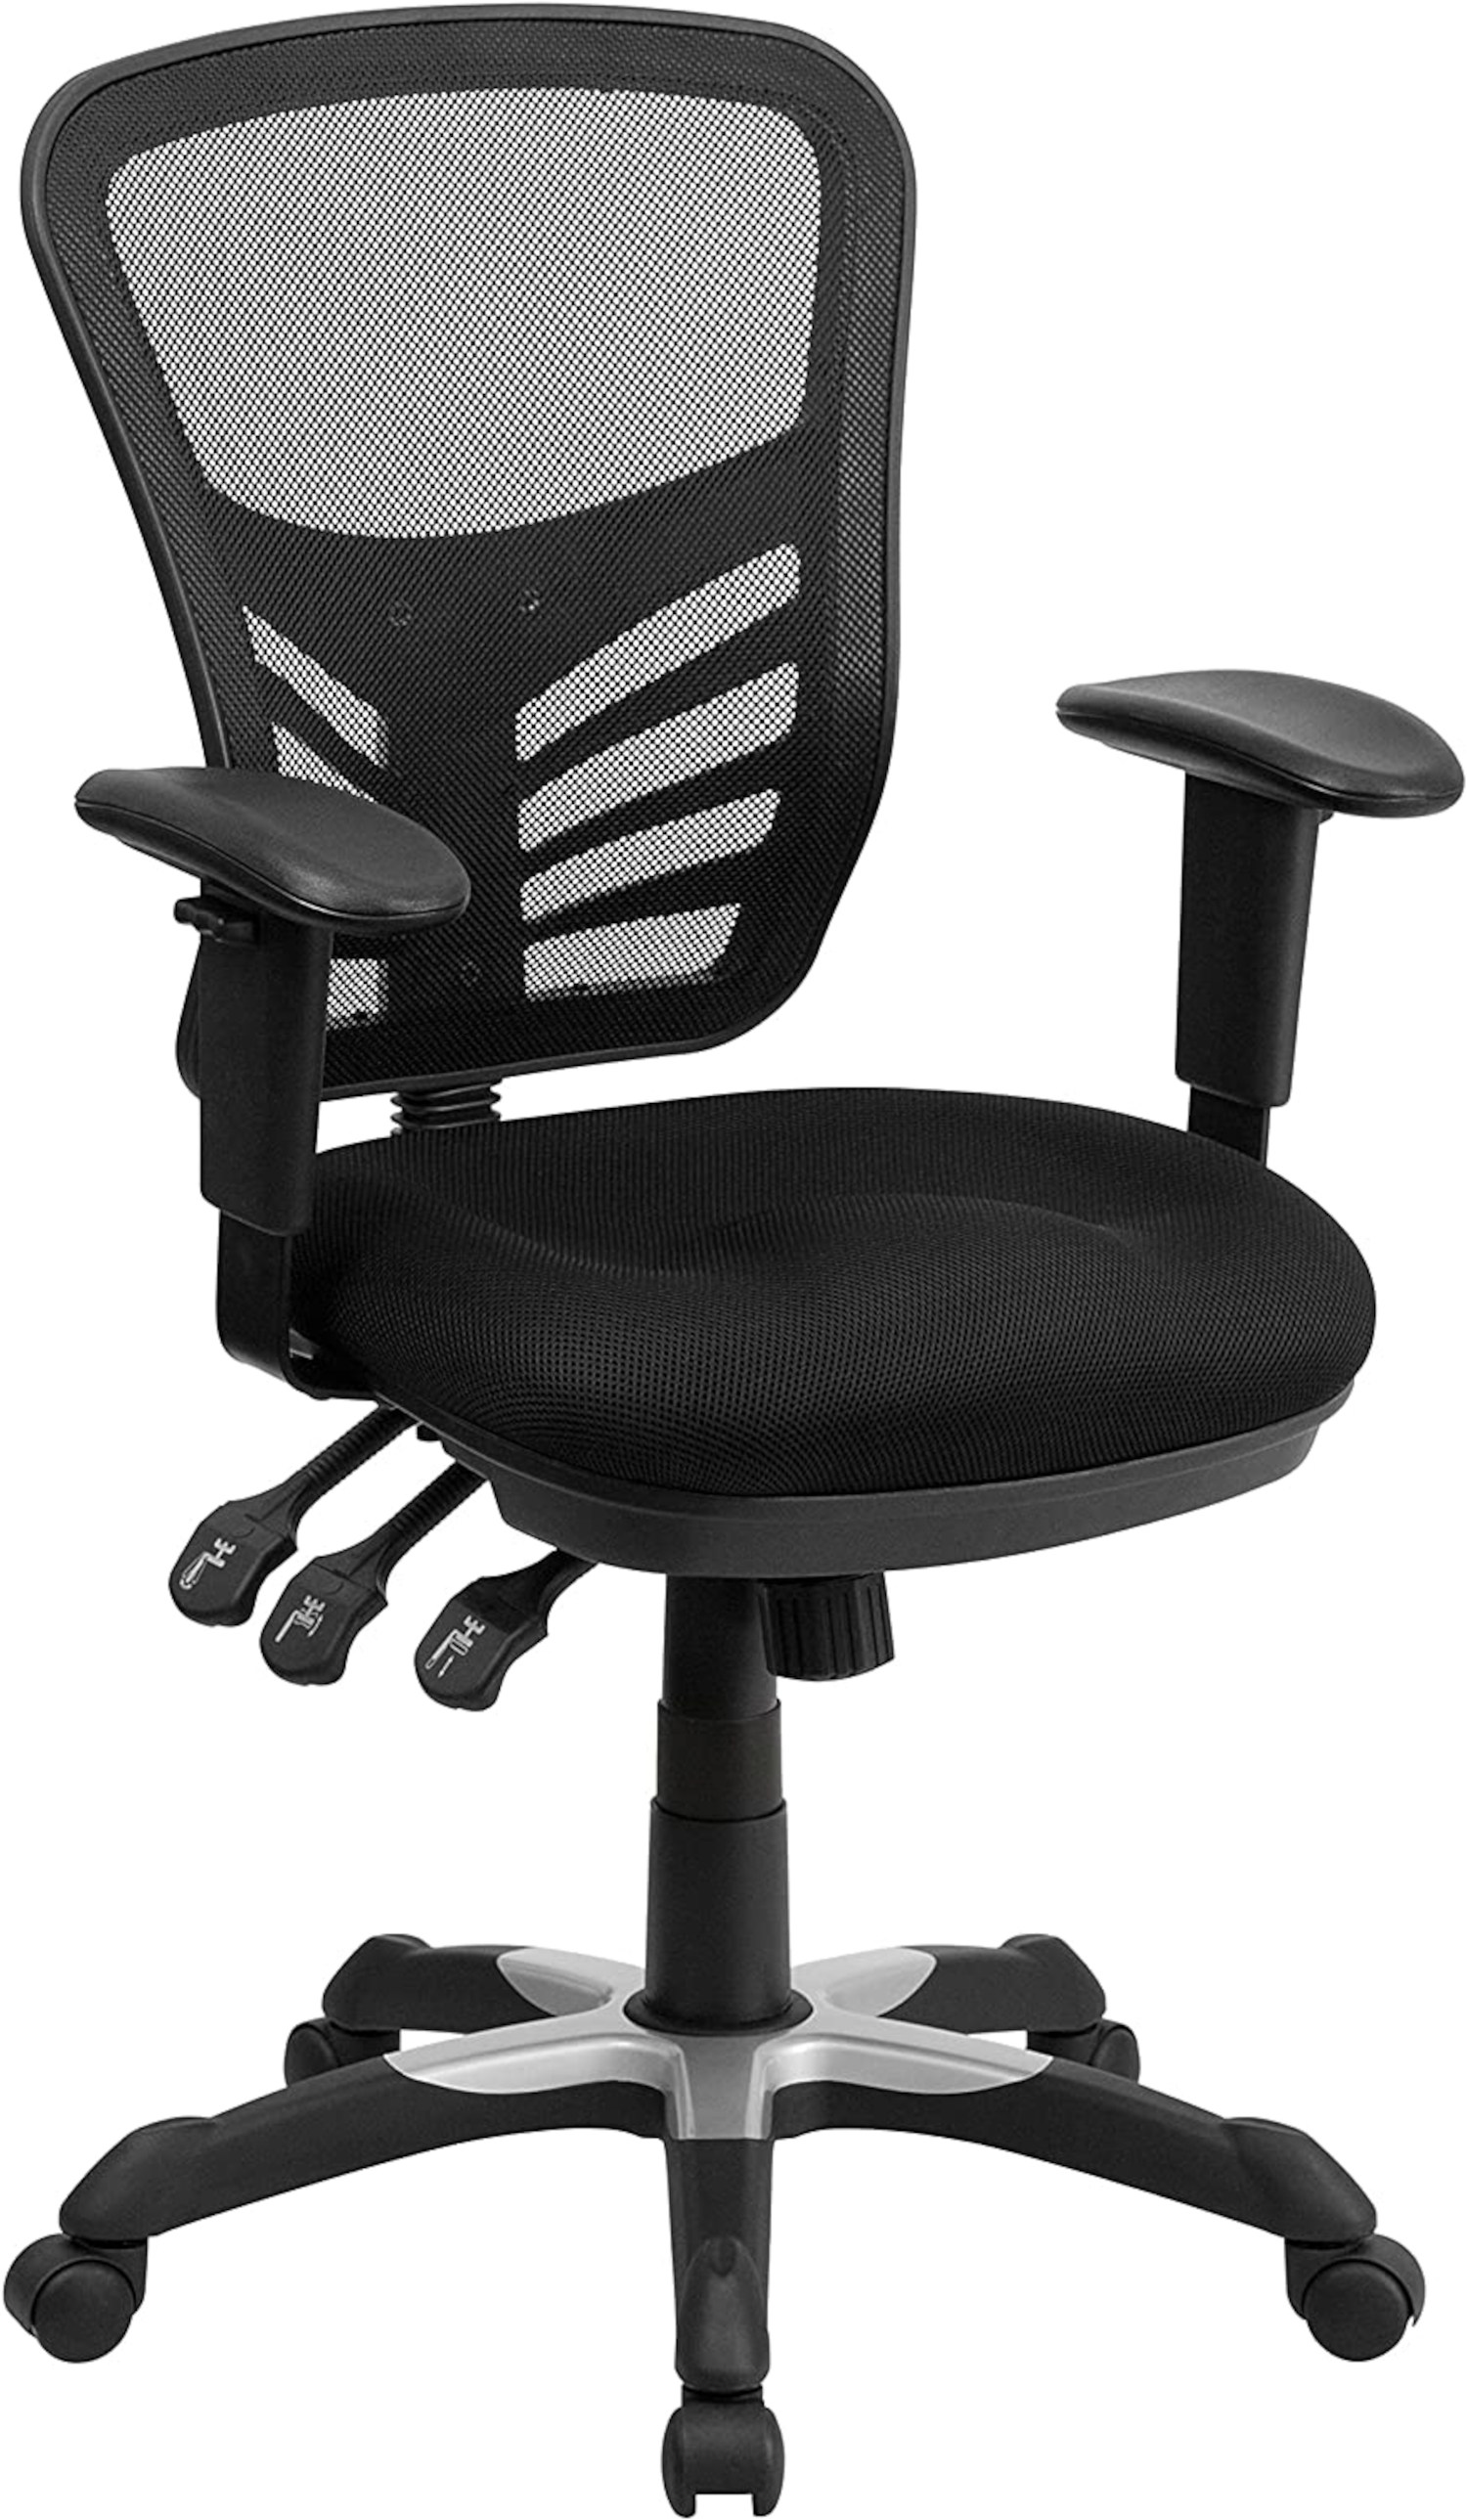 Ergonomic Desk Chair 24.75 x 22.75 x 42.5 - 49.75 : DCY69006-3M